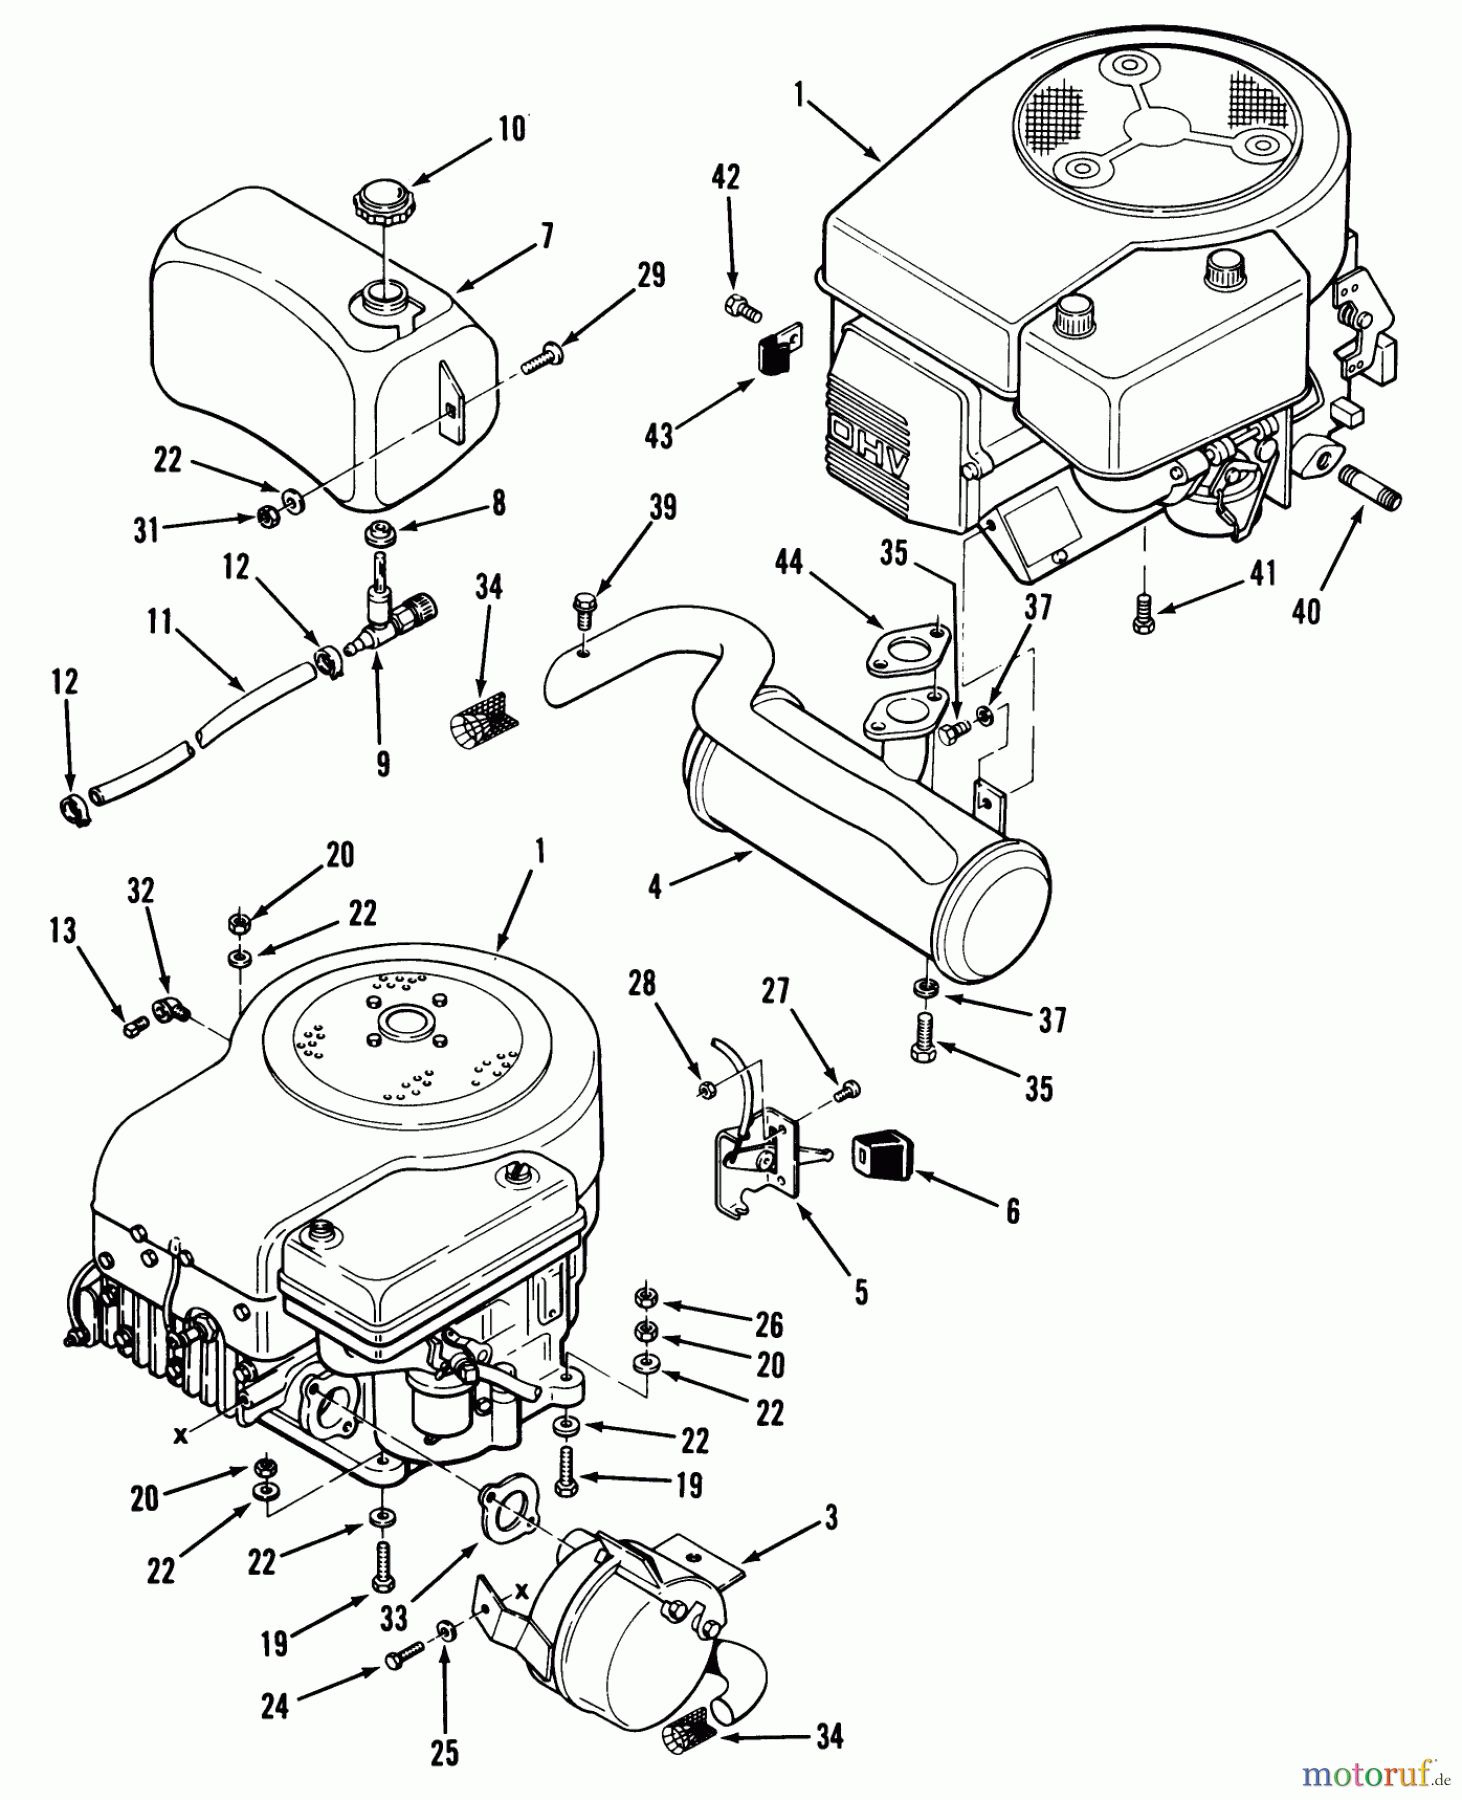  Toro Neu Mowers, Lawn & Garden Tractor Seite 1 32-10B501 (210-5) - Toro 210-5 Tractor, 1990 ENGINE, FUEL & EXHAUST SYSTEMS